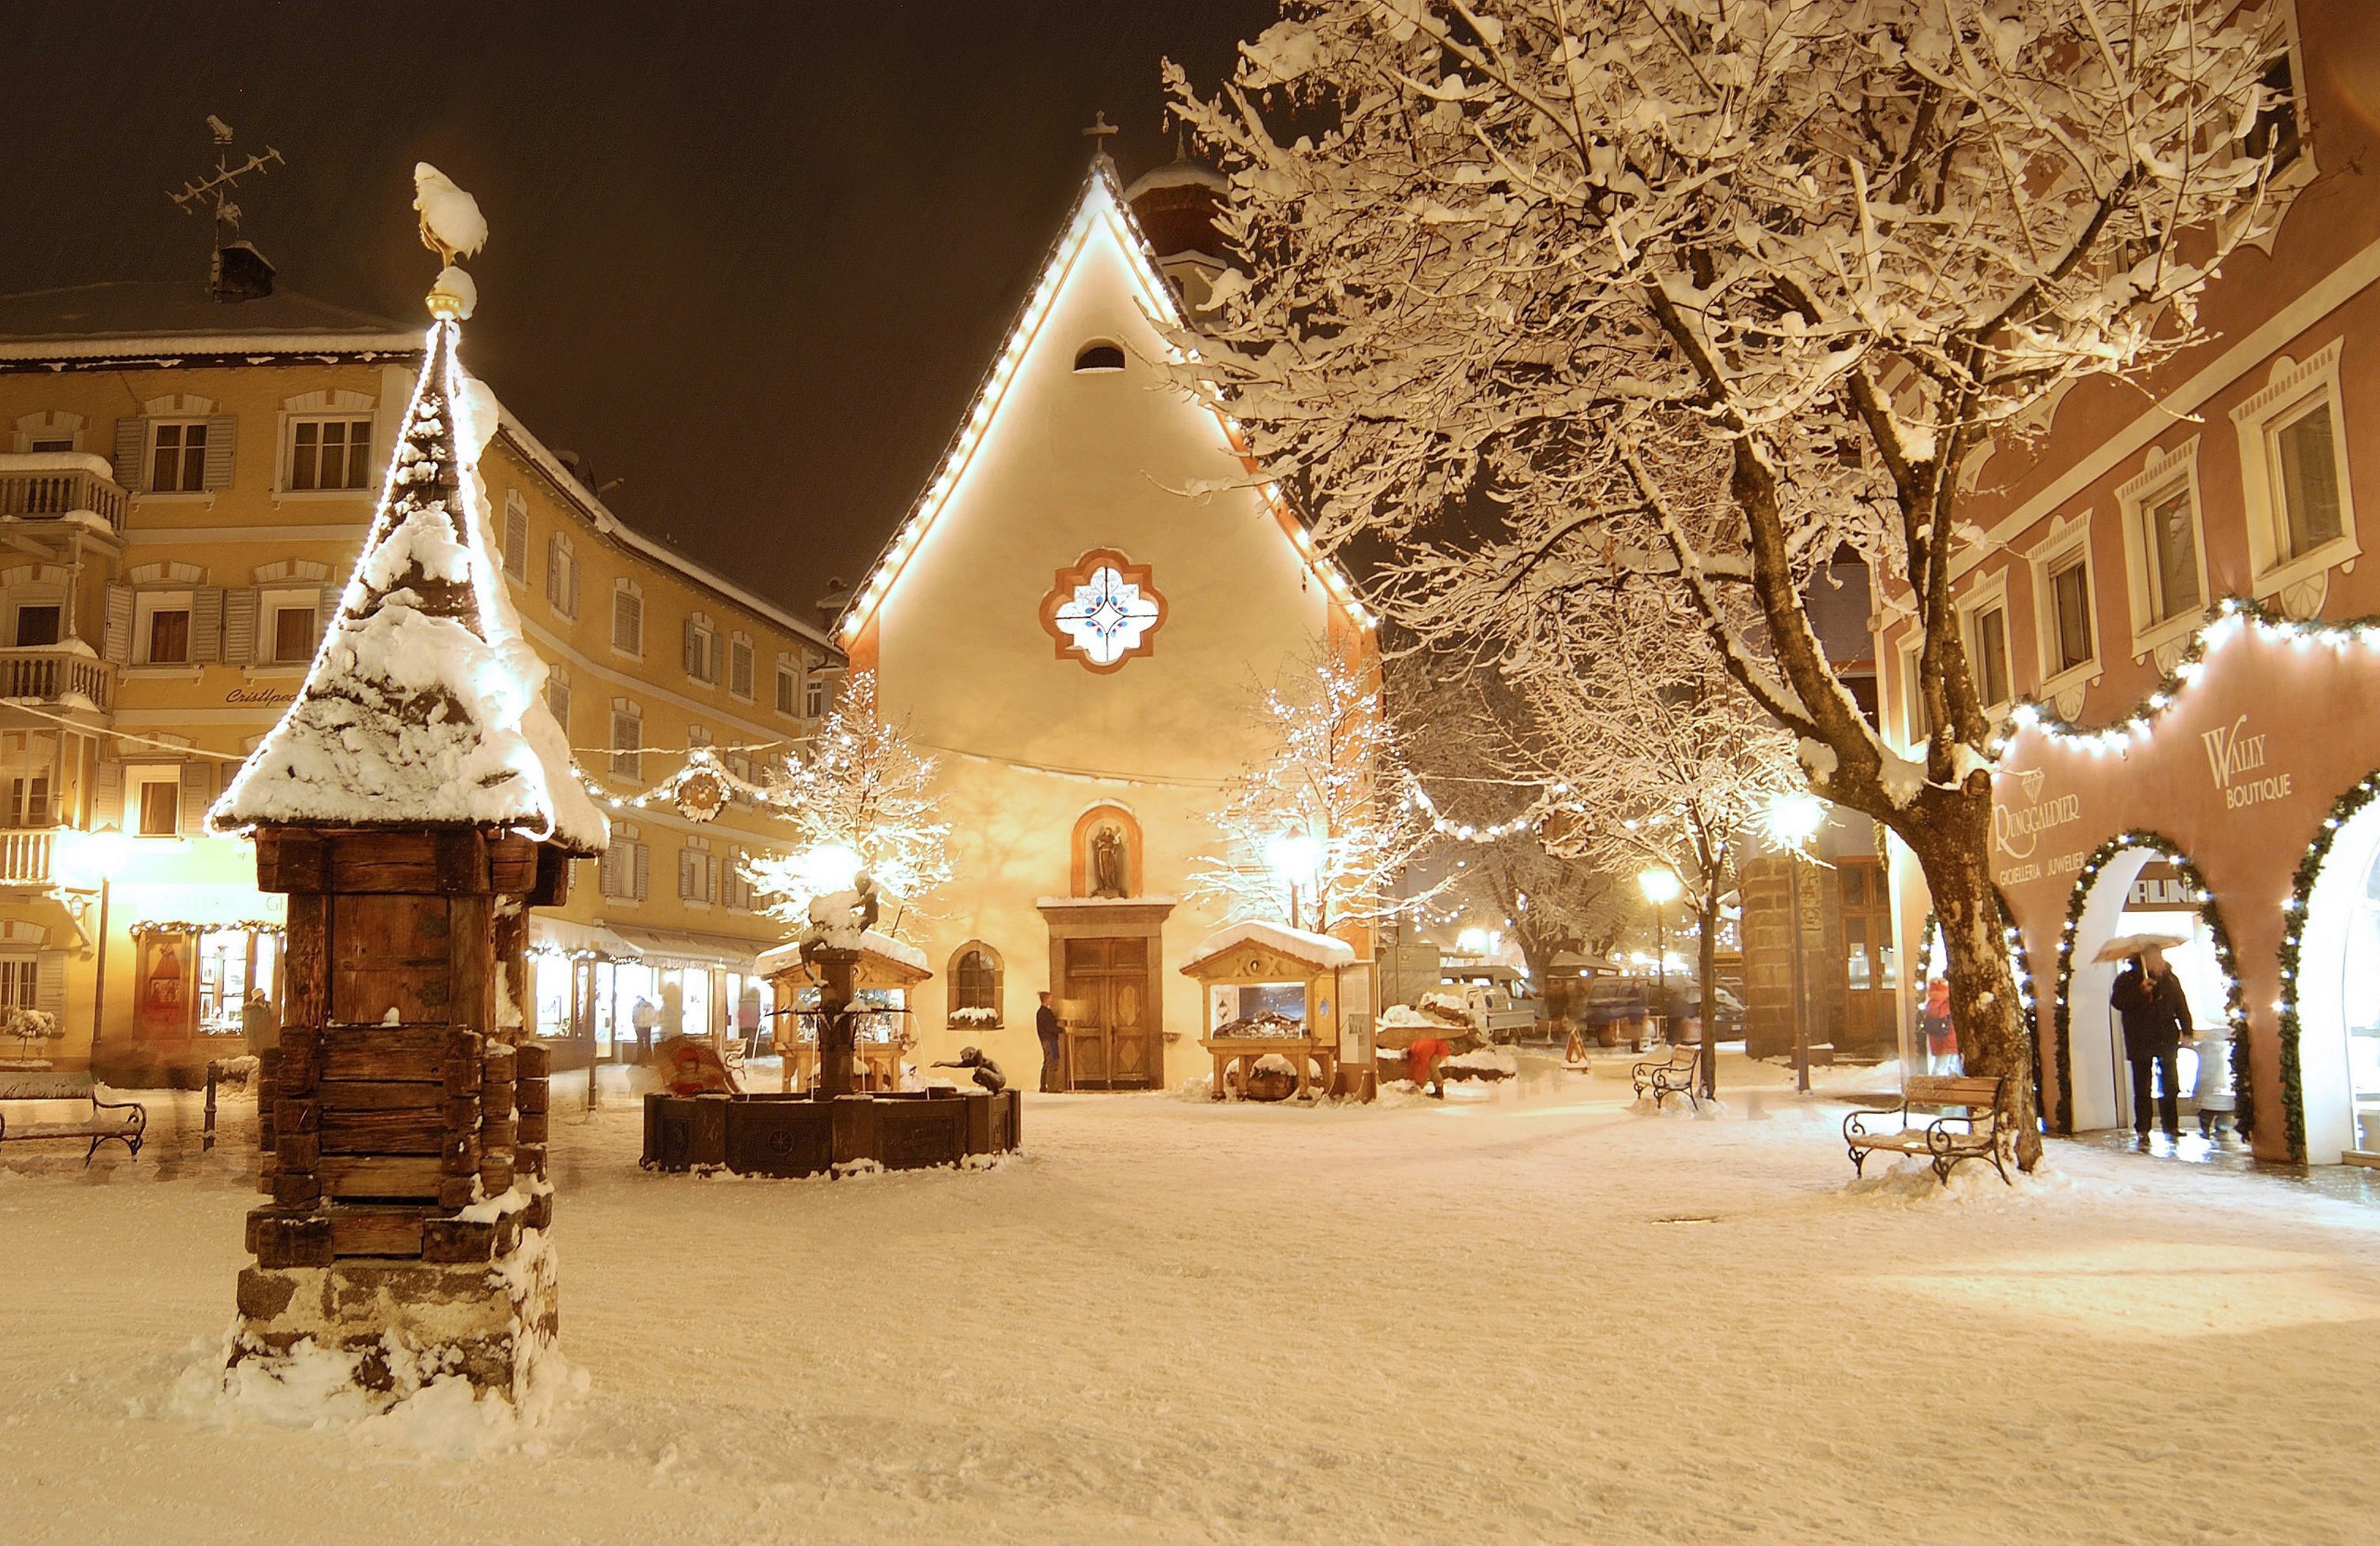 General 4000x2598 Christmas snow town night winter idyllic